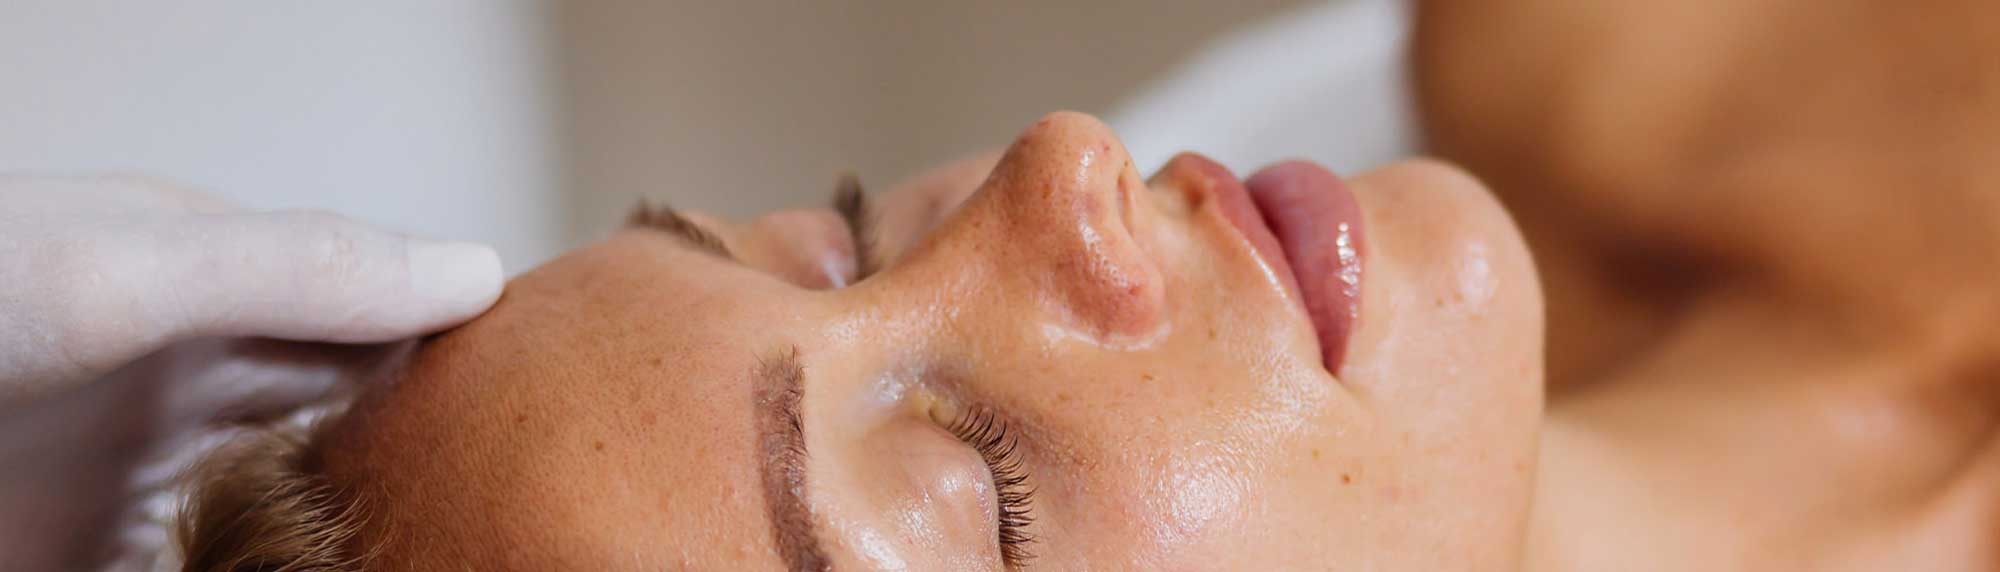 Woman receiving a professional skin treatment in salon